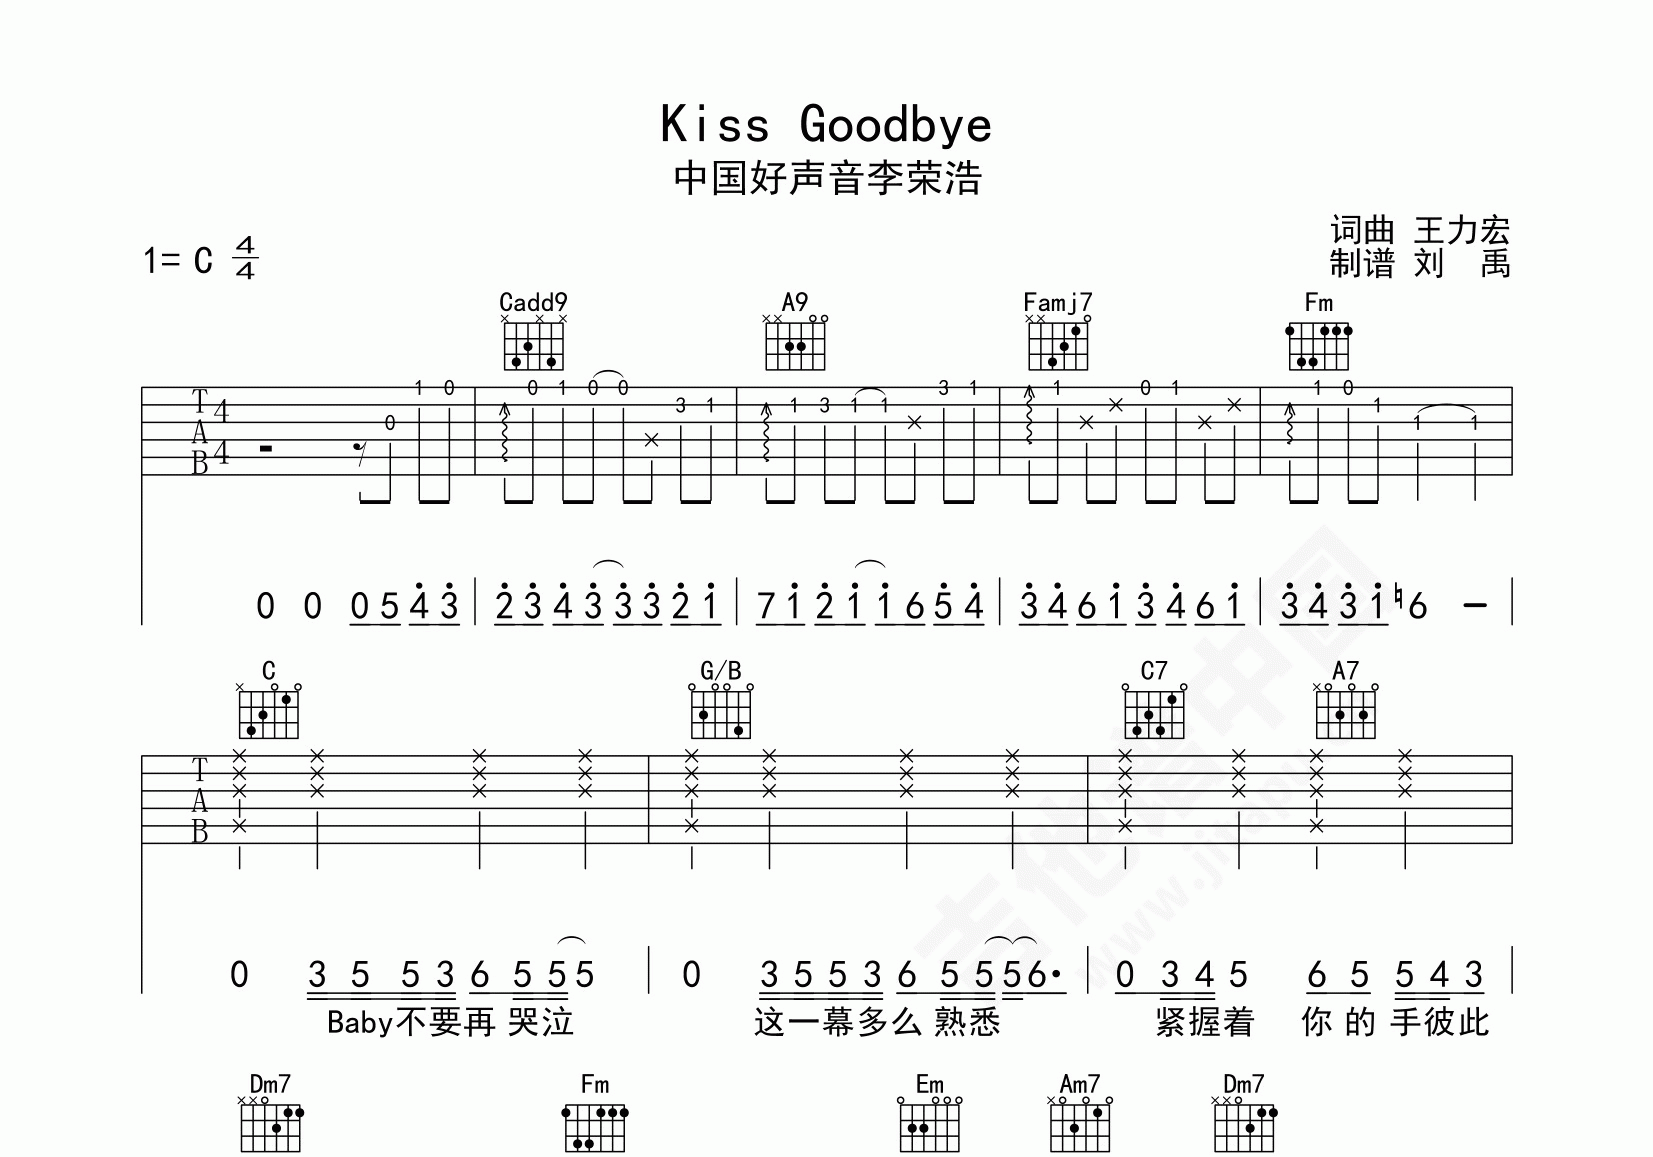 KISS GOODBYE吉他谱 - 王力宏 - D调吉他弹唱谱 - 琴谱网